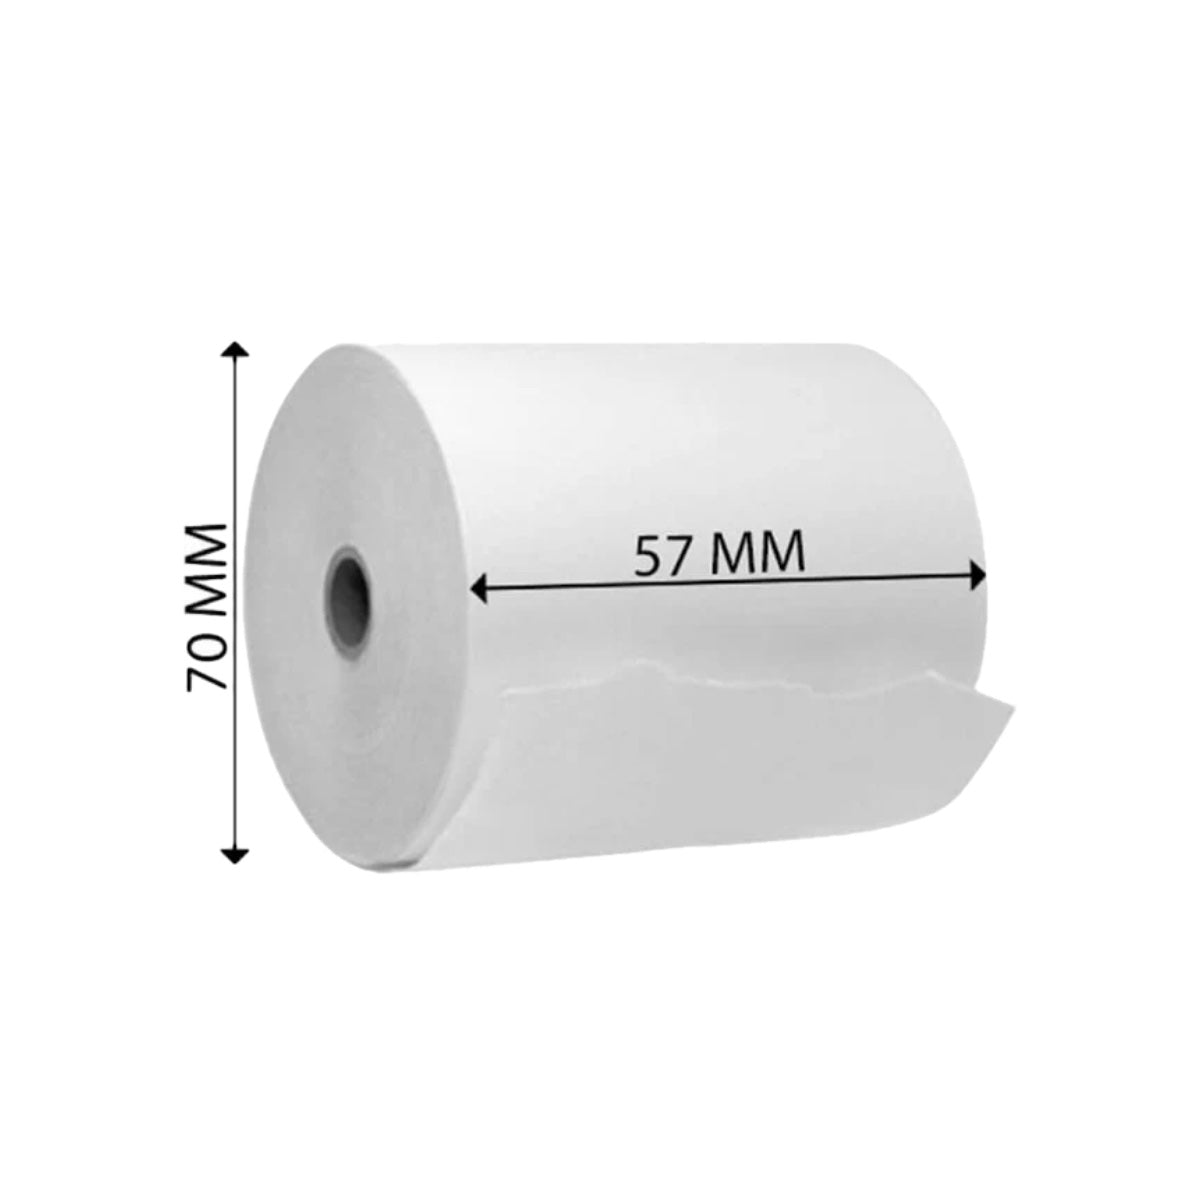 EMIGO Thermal Cash Roll, 57 x 70 mm x 0.5 inch, 5/pack, White